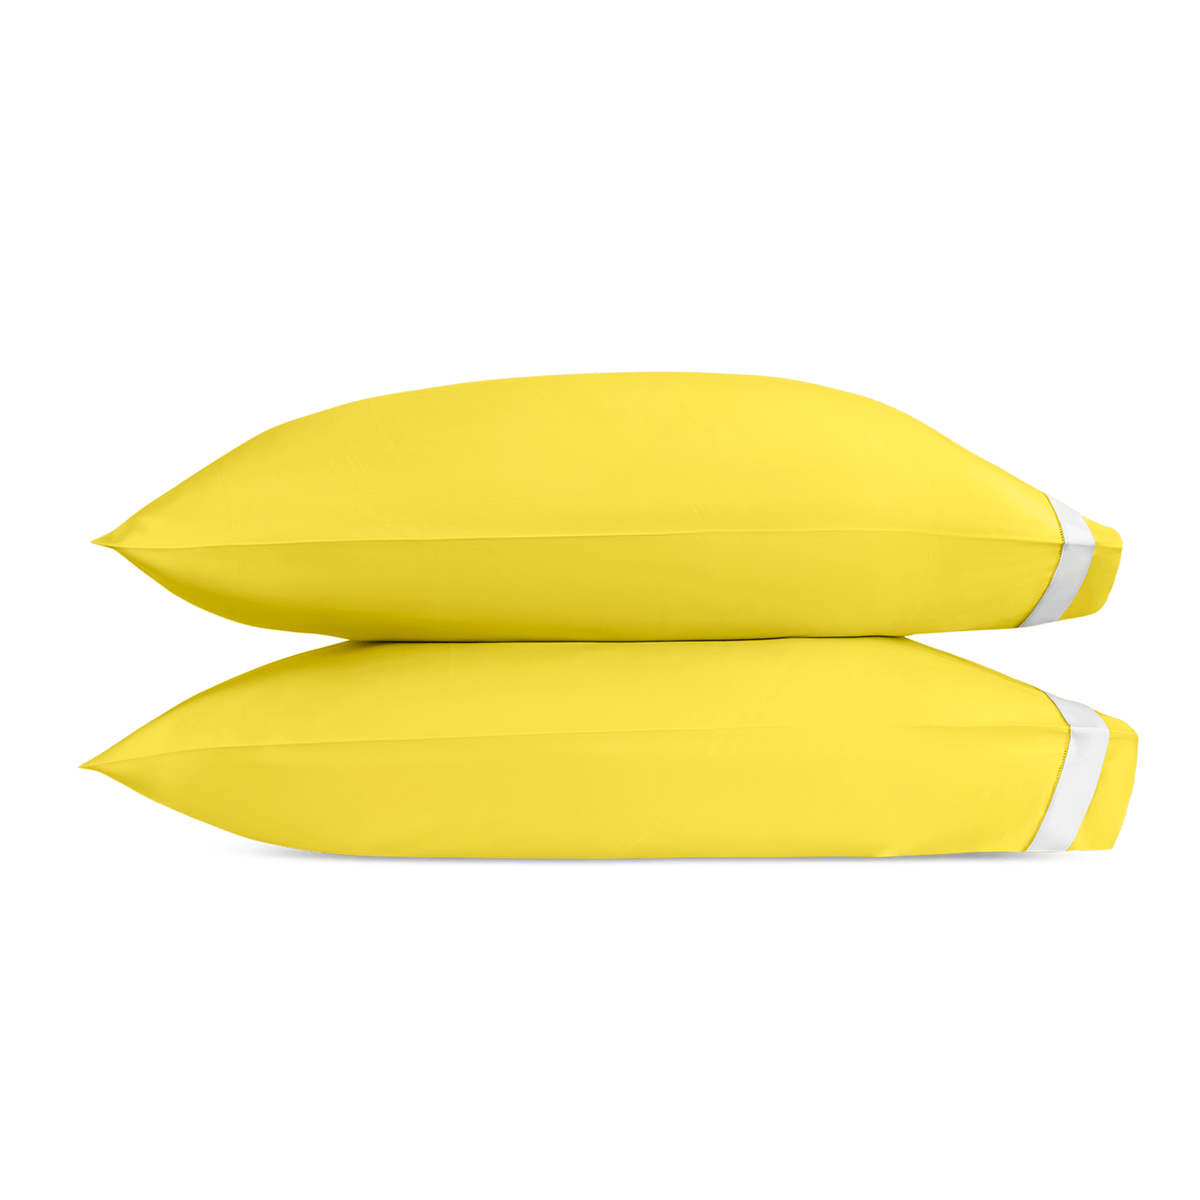 Silo Image of Matouk Ambrose Bedding Pillowcases in Lemon/Bone Color